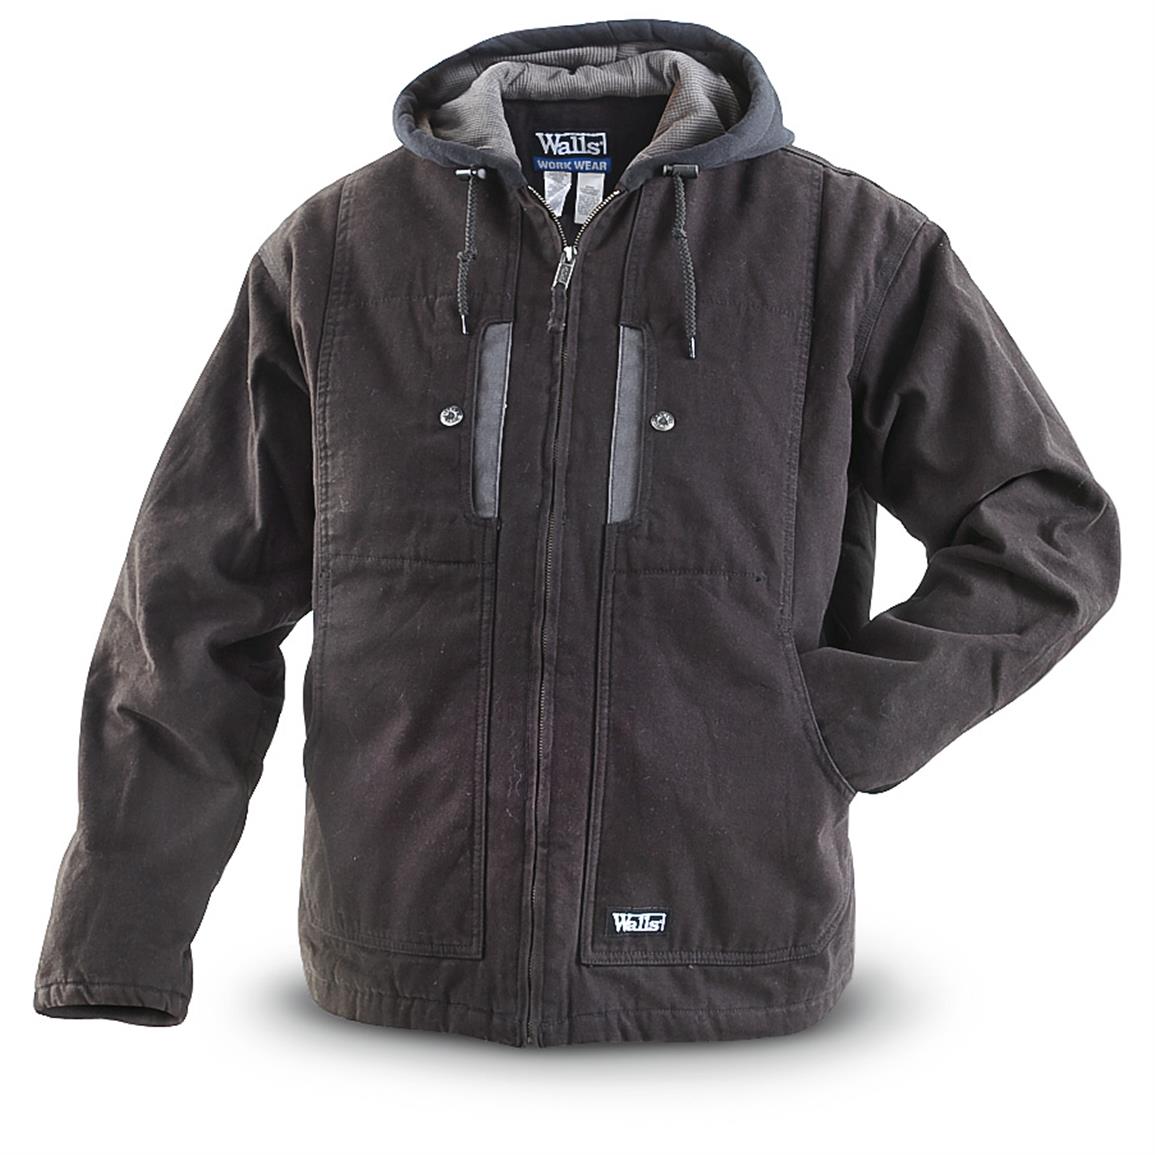 Walls Fleece-lined Jacket - 627526, Insulated Jackets & Coats at